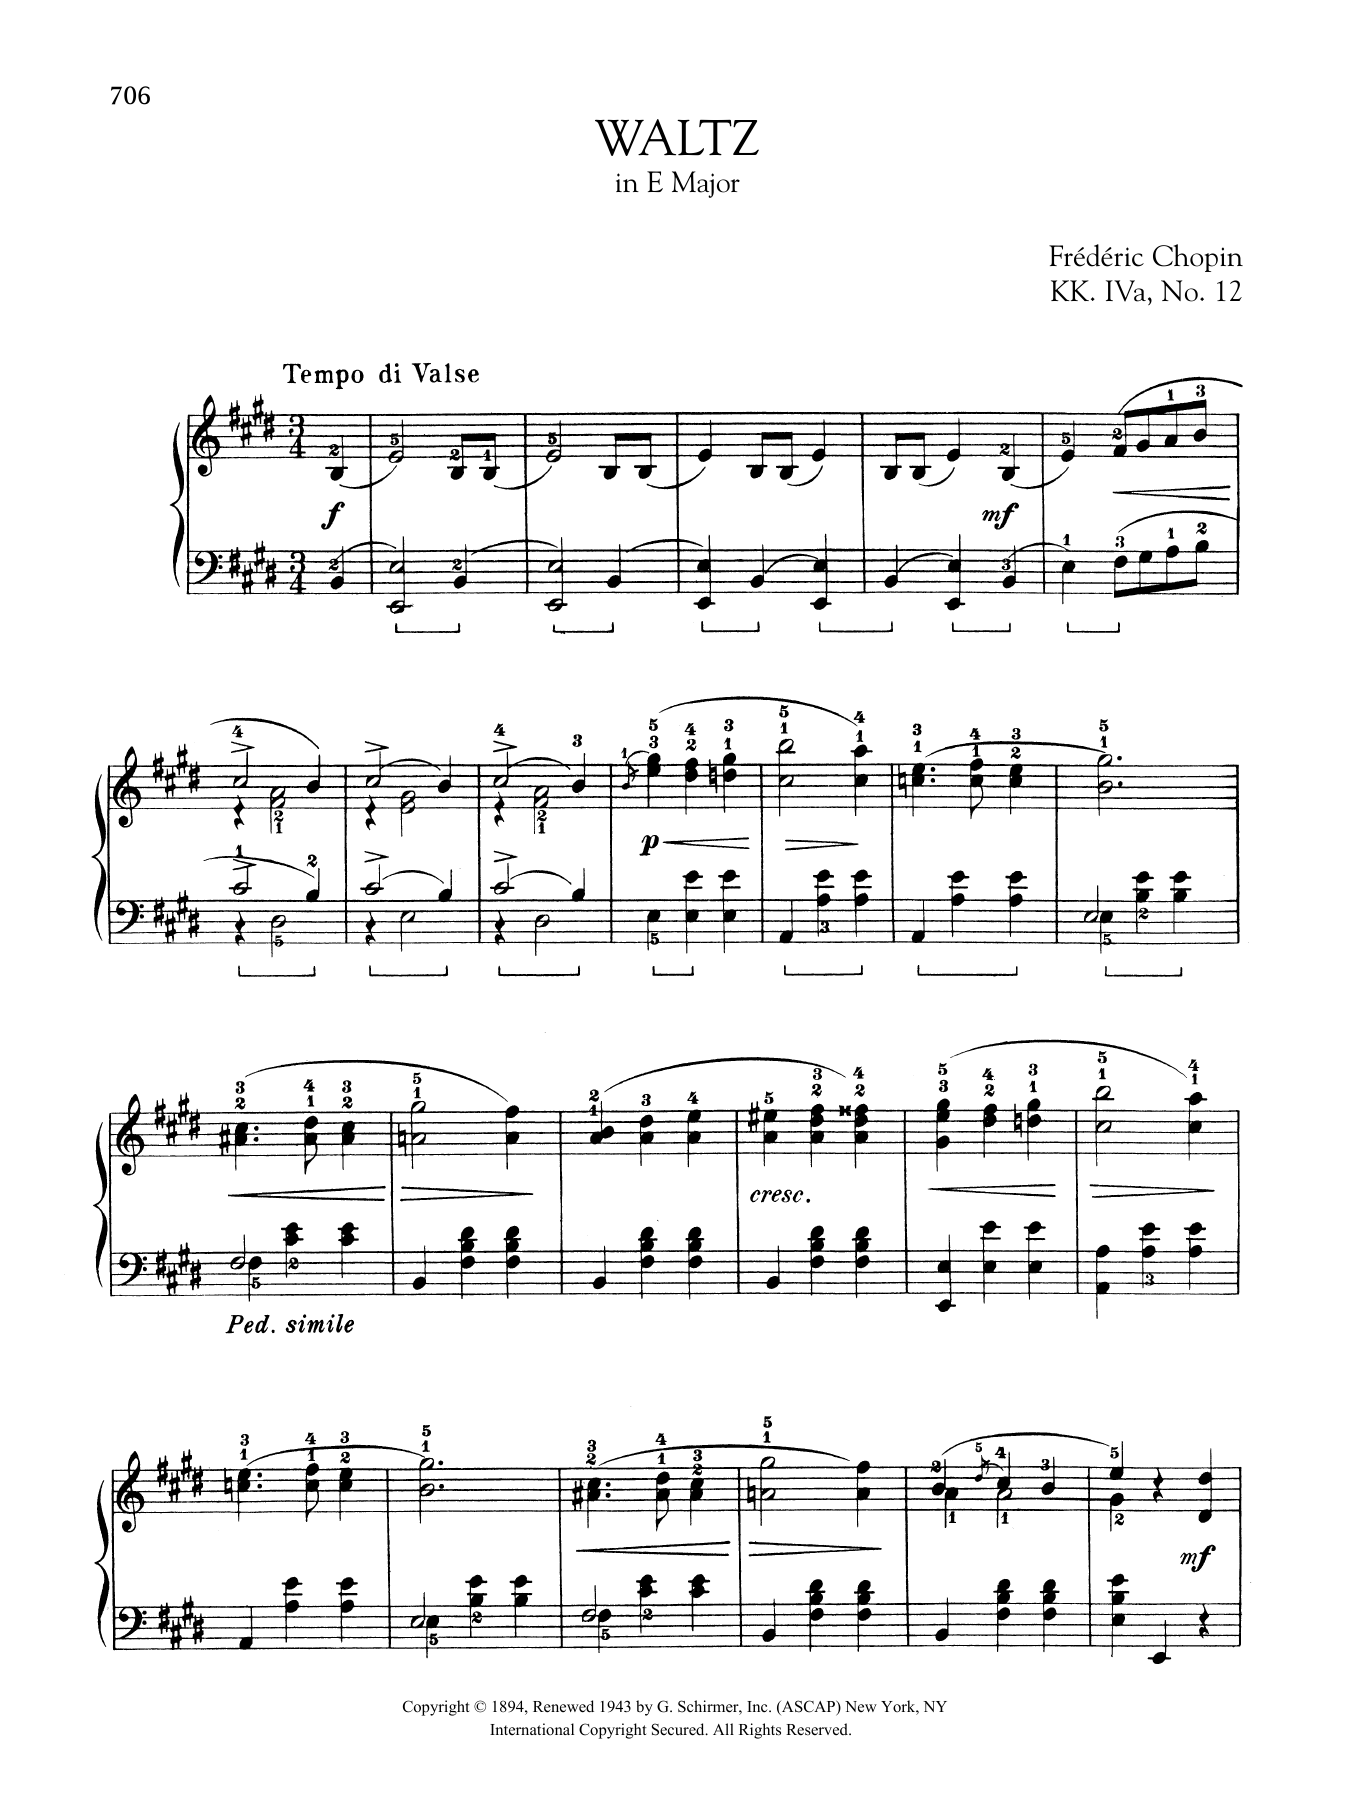 Download Frederic Chopin Waltz in E Major, KK. IVa, No. 12 Sheet Music